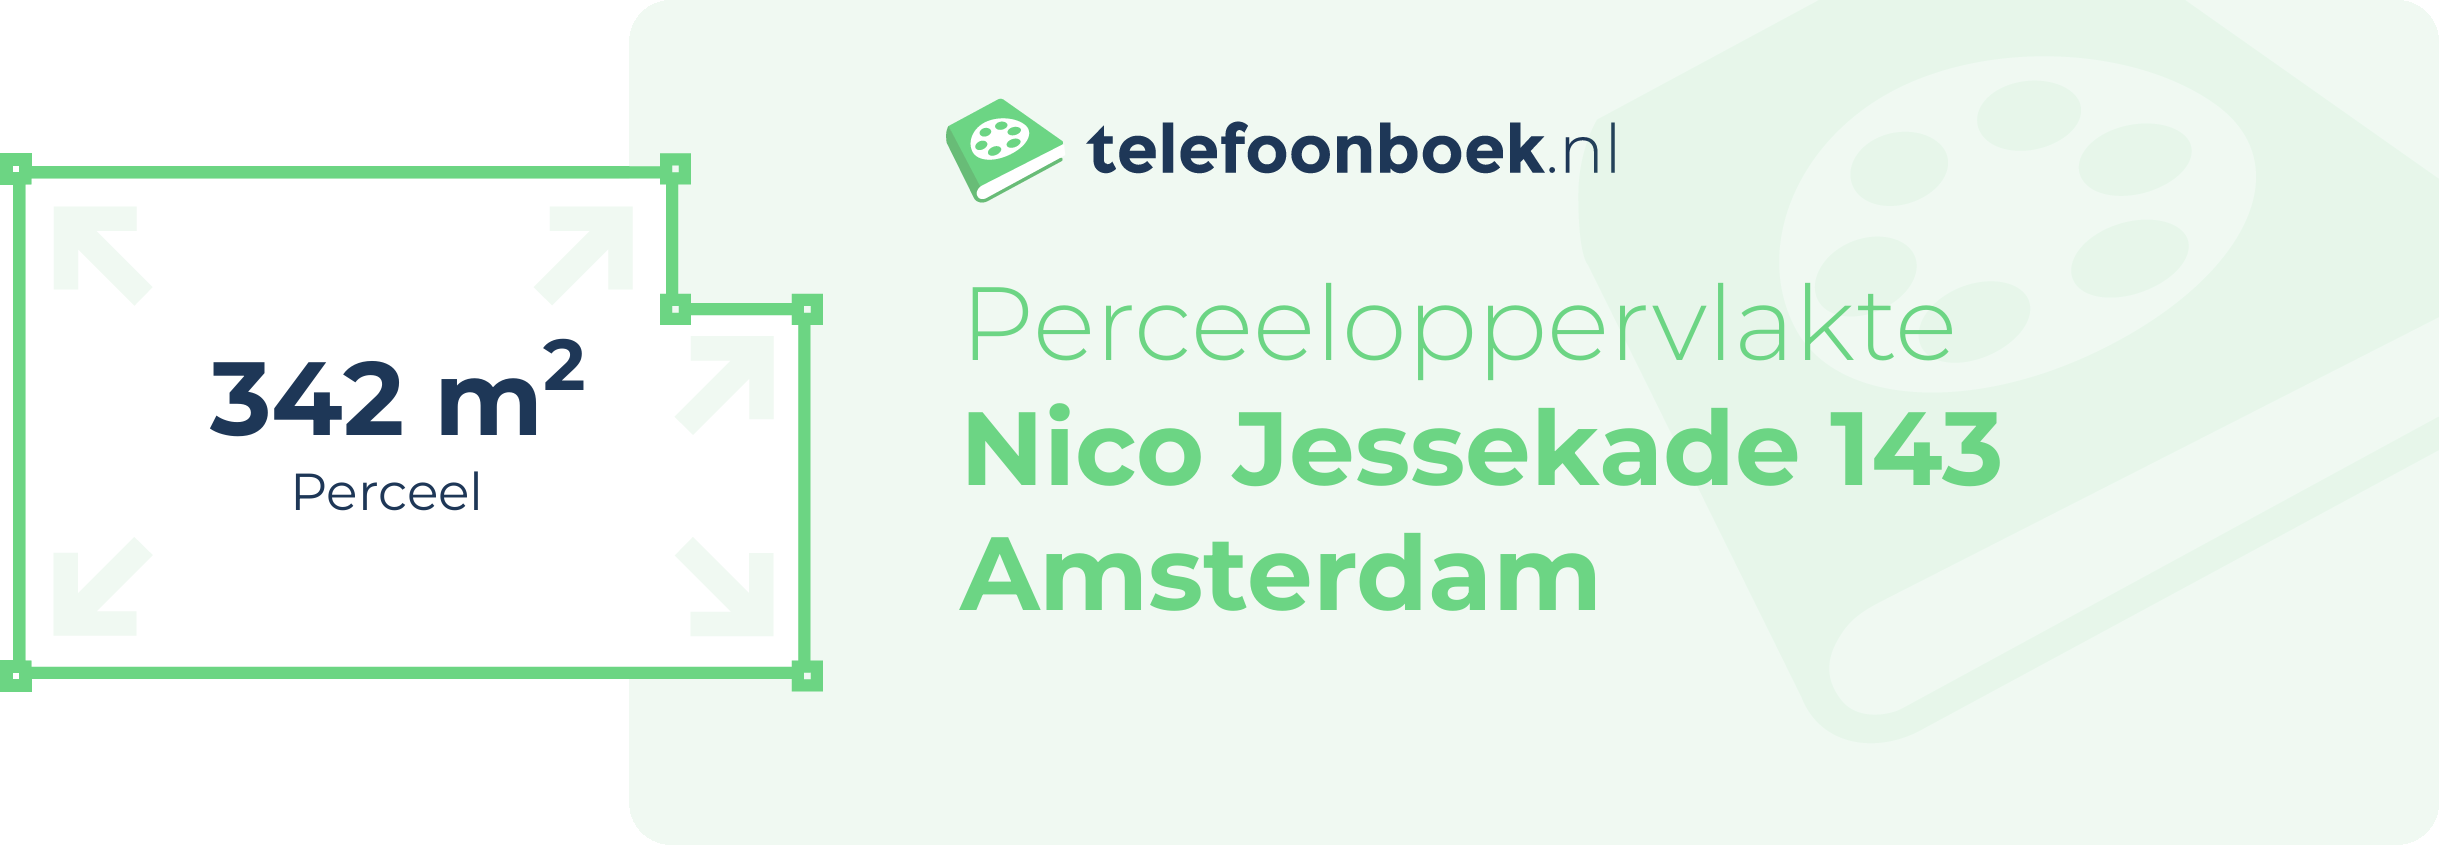 Perceeloppervlakte Nico Jessekade 143 Amsterdam